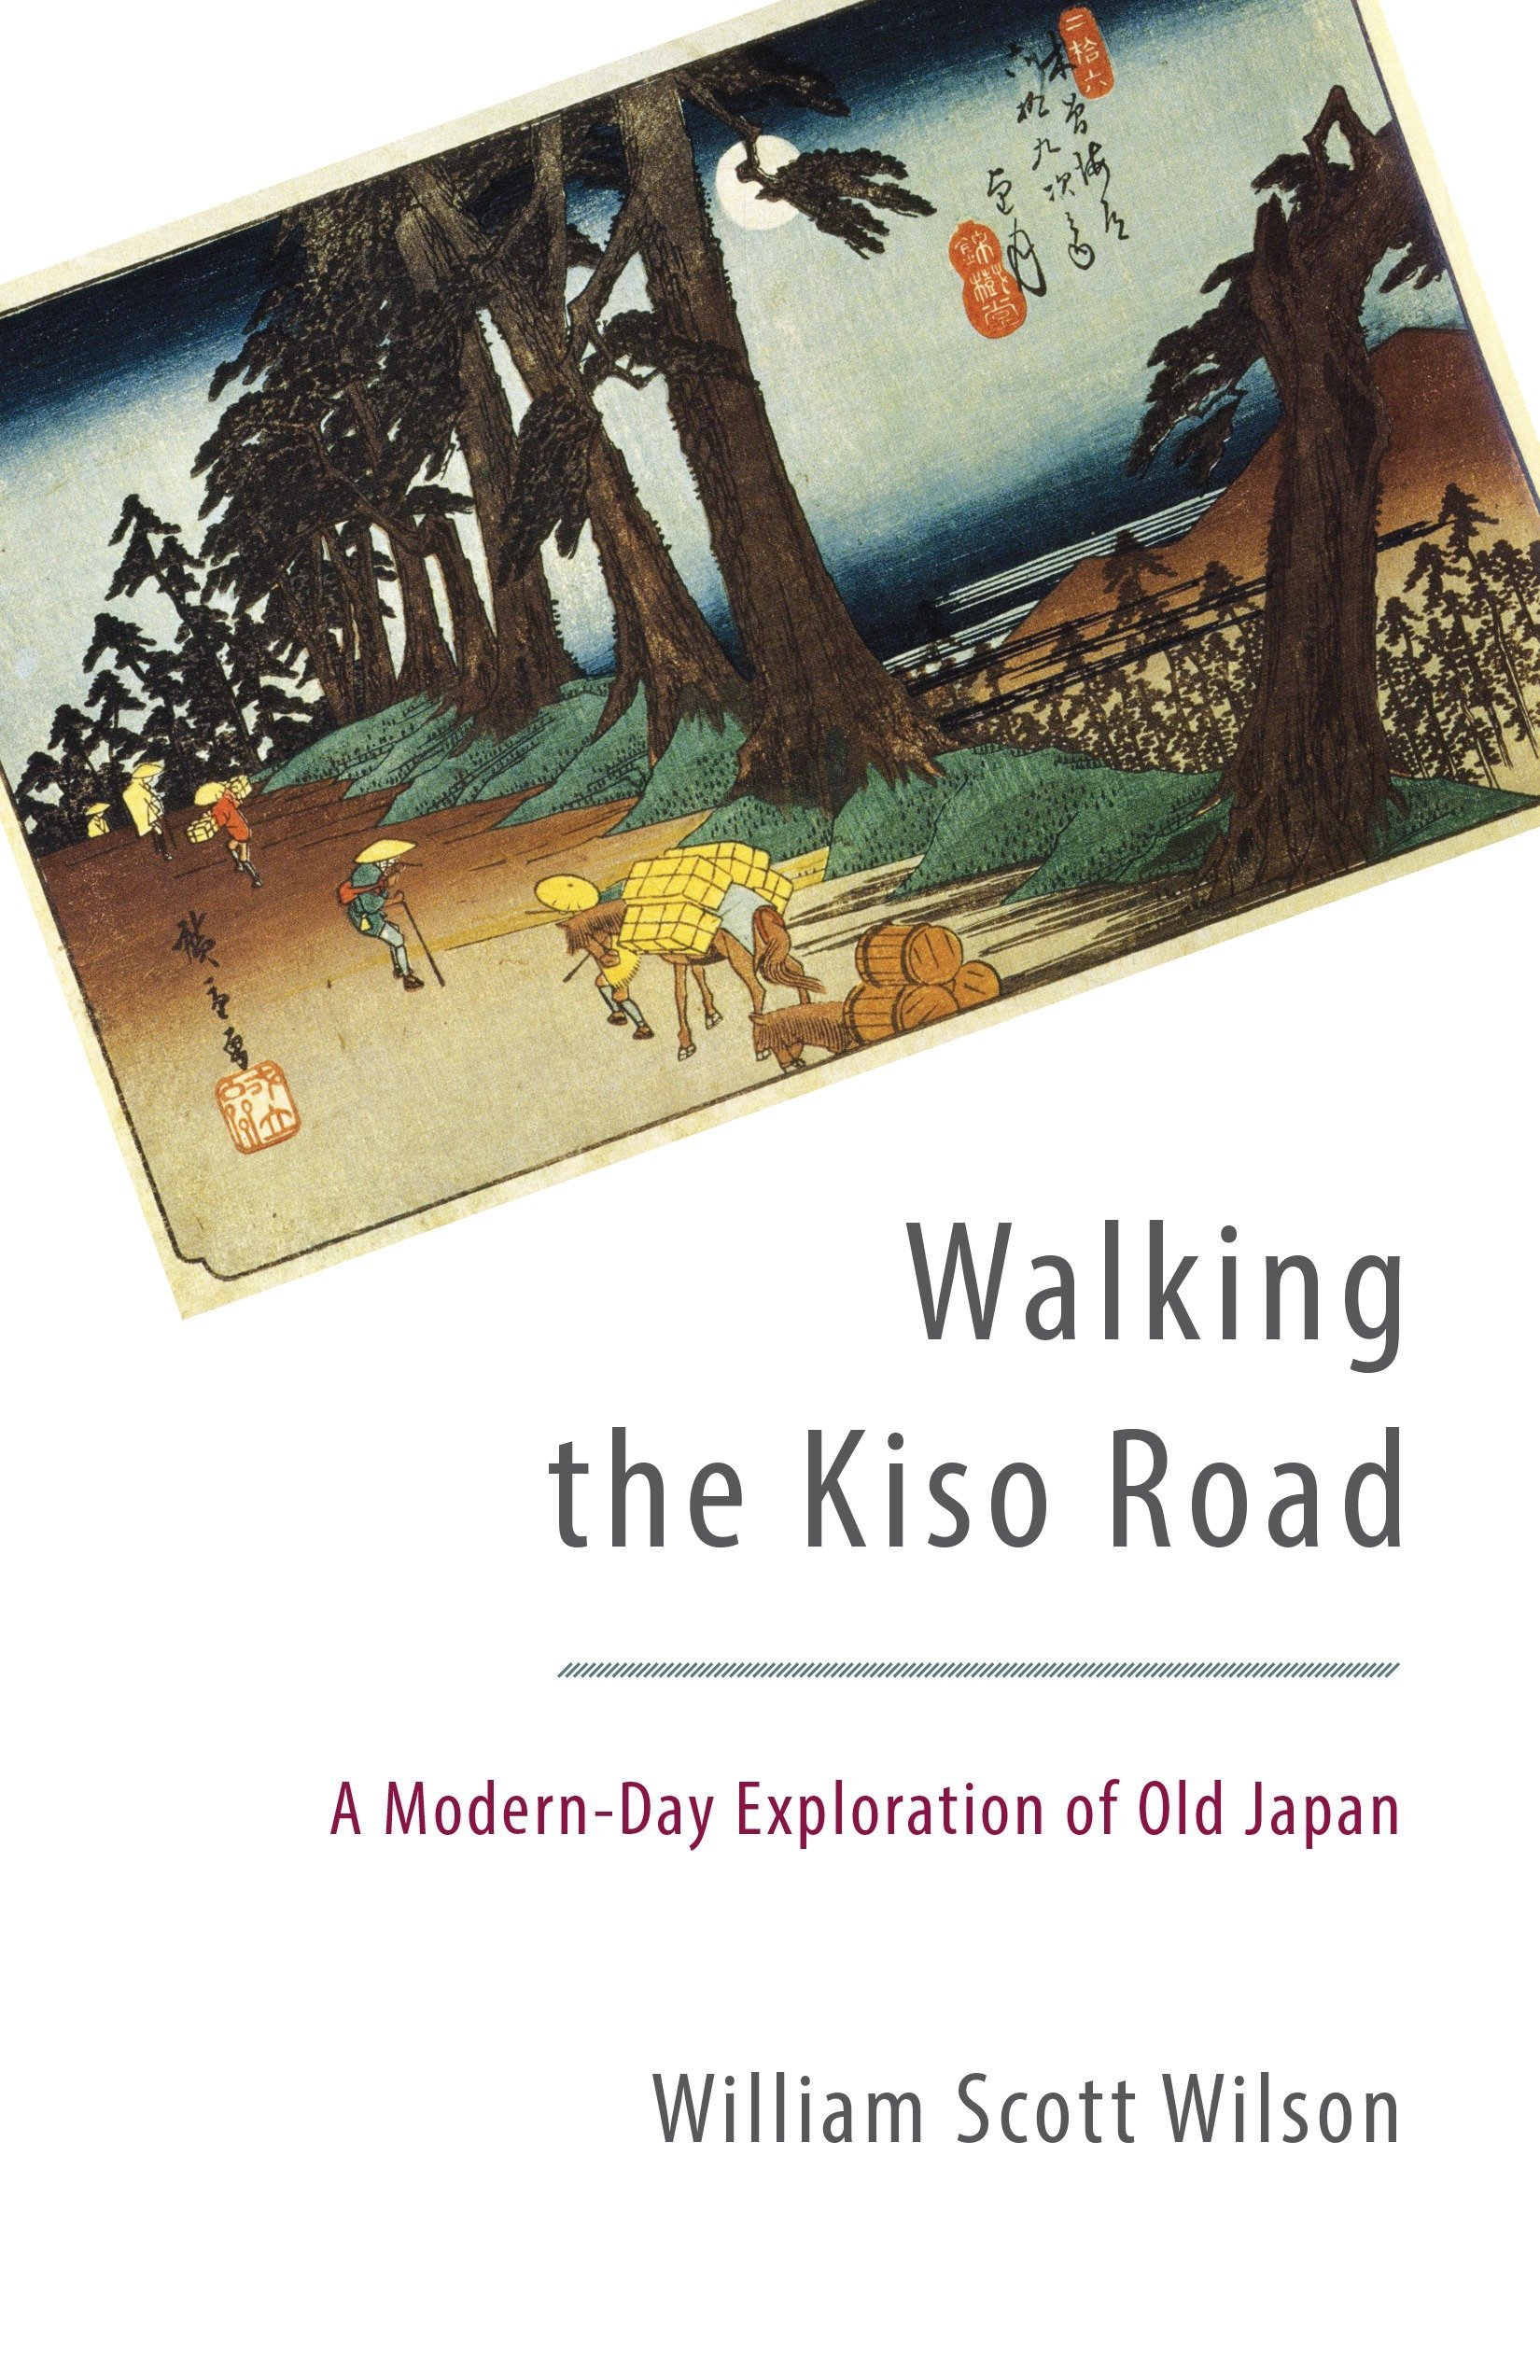 Walking the Kiso Road: A Modern-Day Exploration of Old Japan (SHAMBHALA)